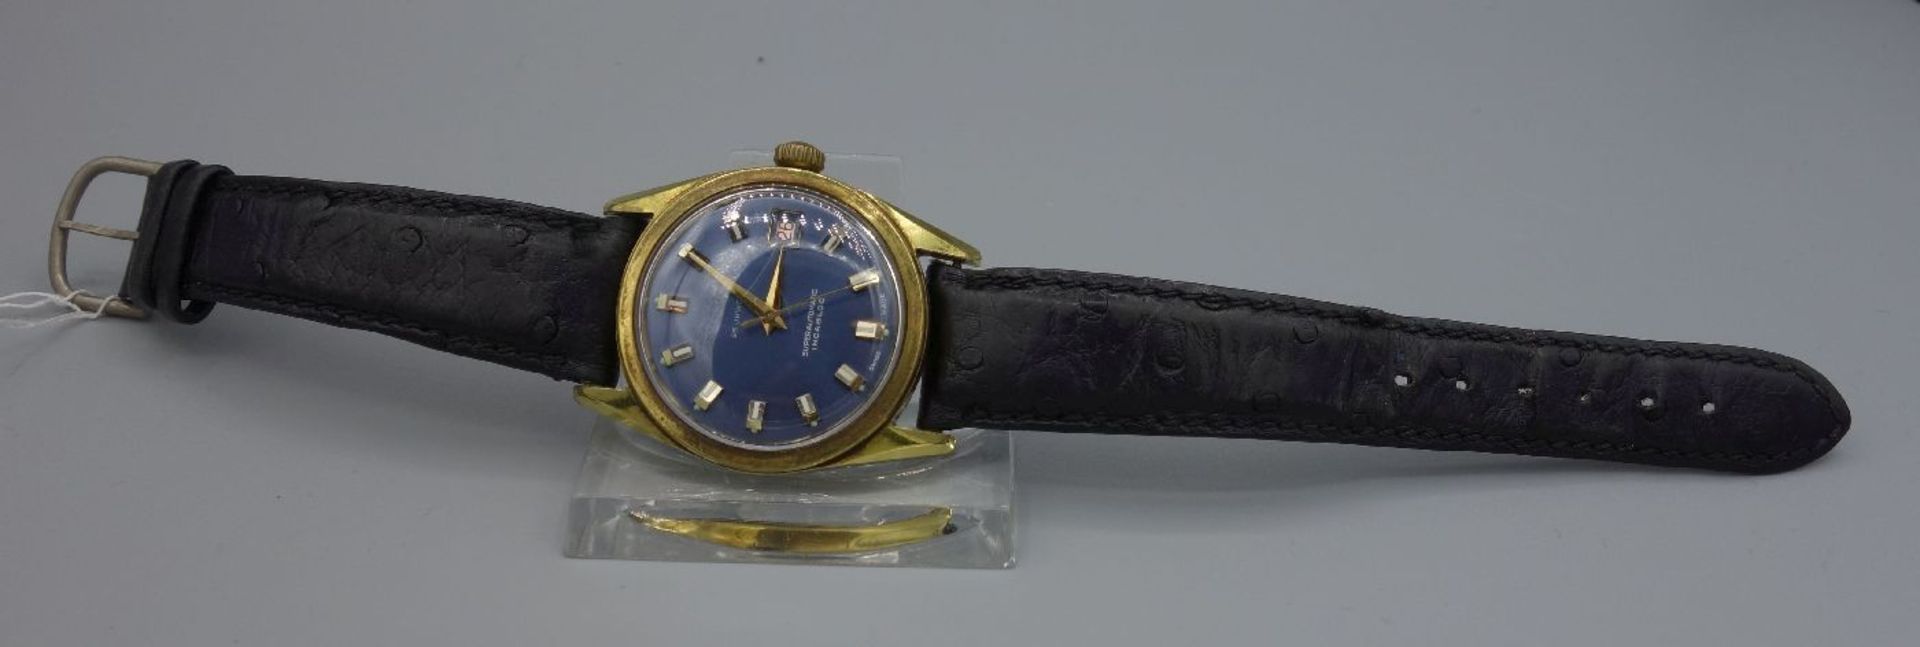 VINTAGE ARMBANDUHR - TECHNOS / wristwatch, Mitte 20. Jh., Automatik-Uhr, Manufaktur Gunzinger Freres - Image 2 of 5